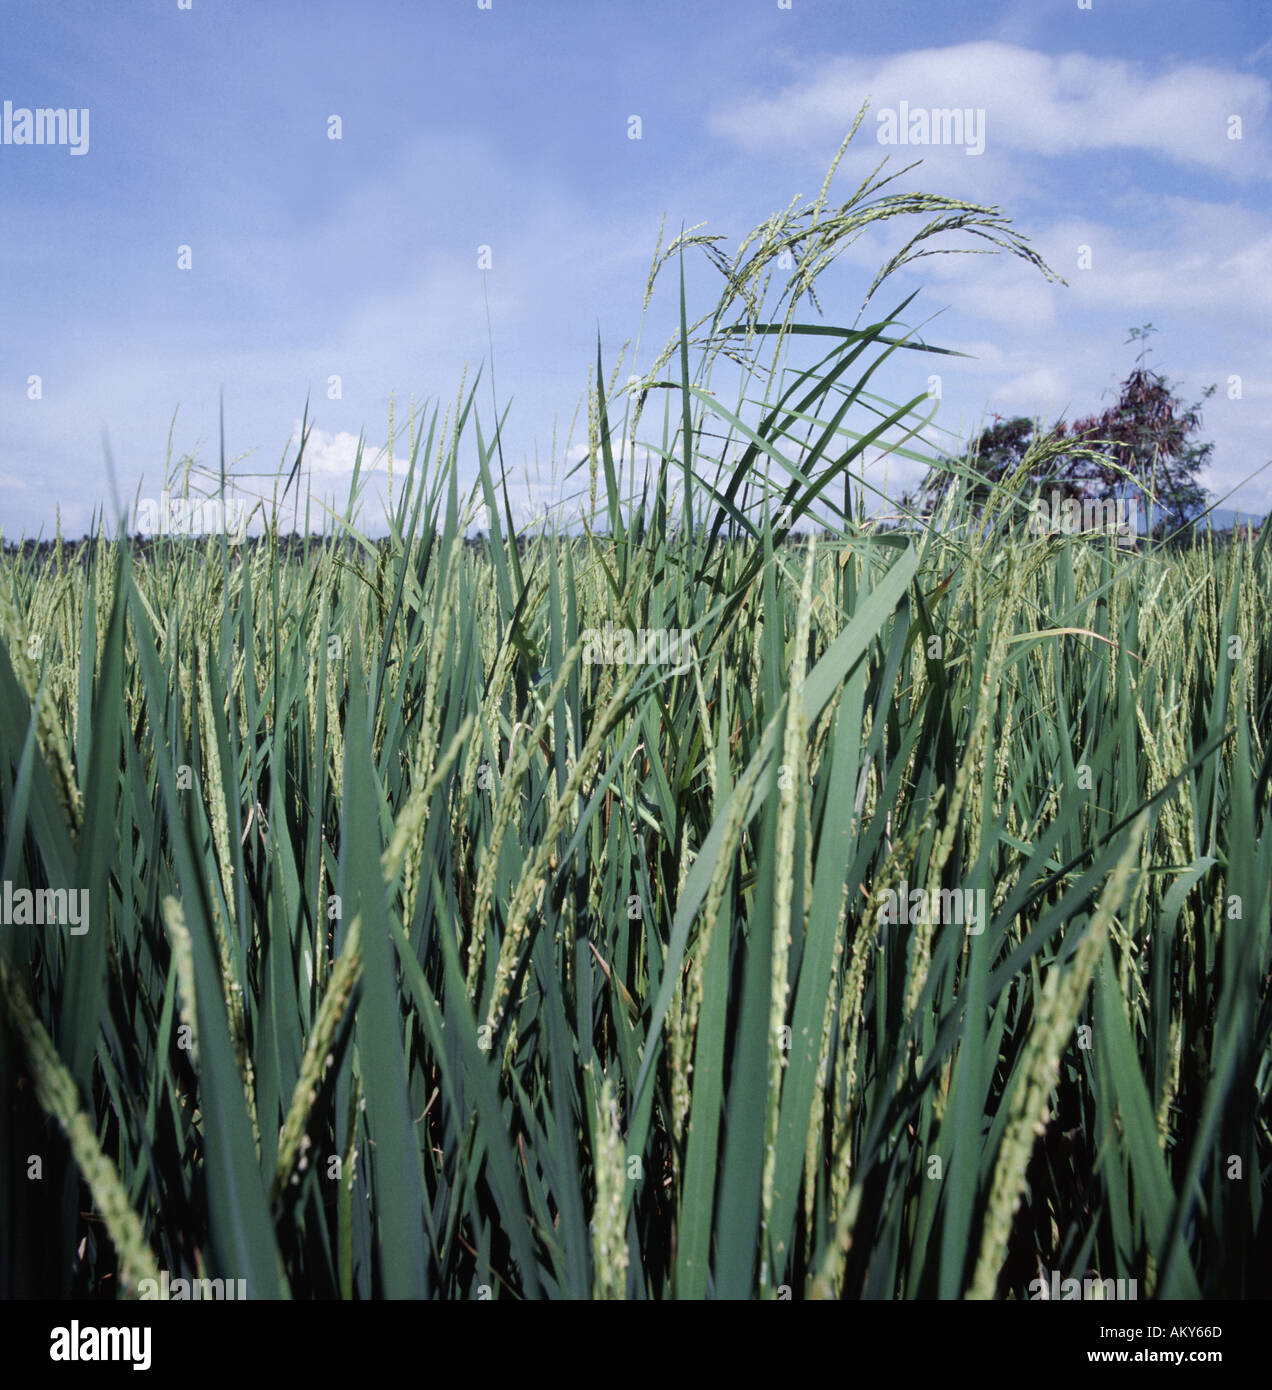 Volunteer long stalked rice variety in crop of Dwarf hybrid rice weed Oryza sativa Stock Photo